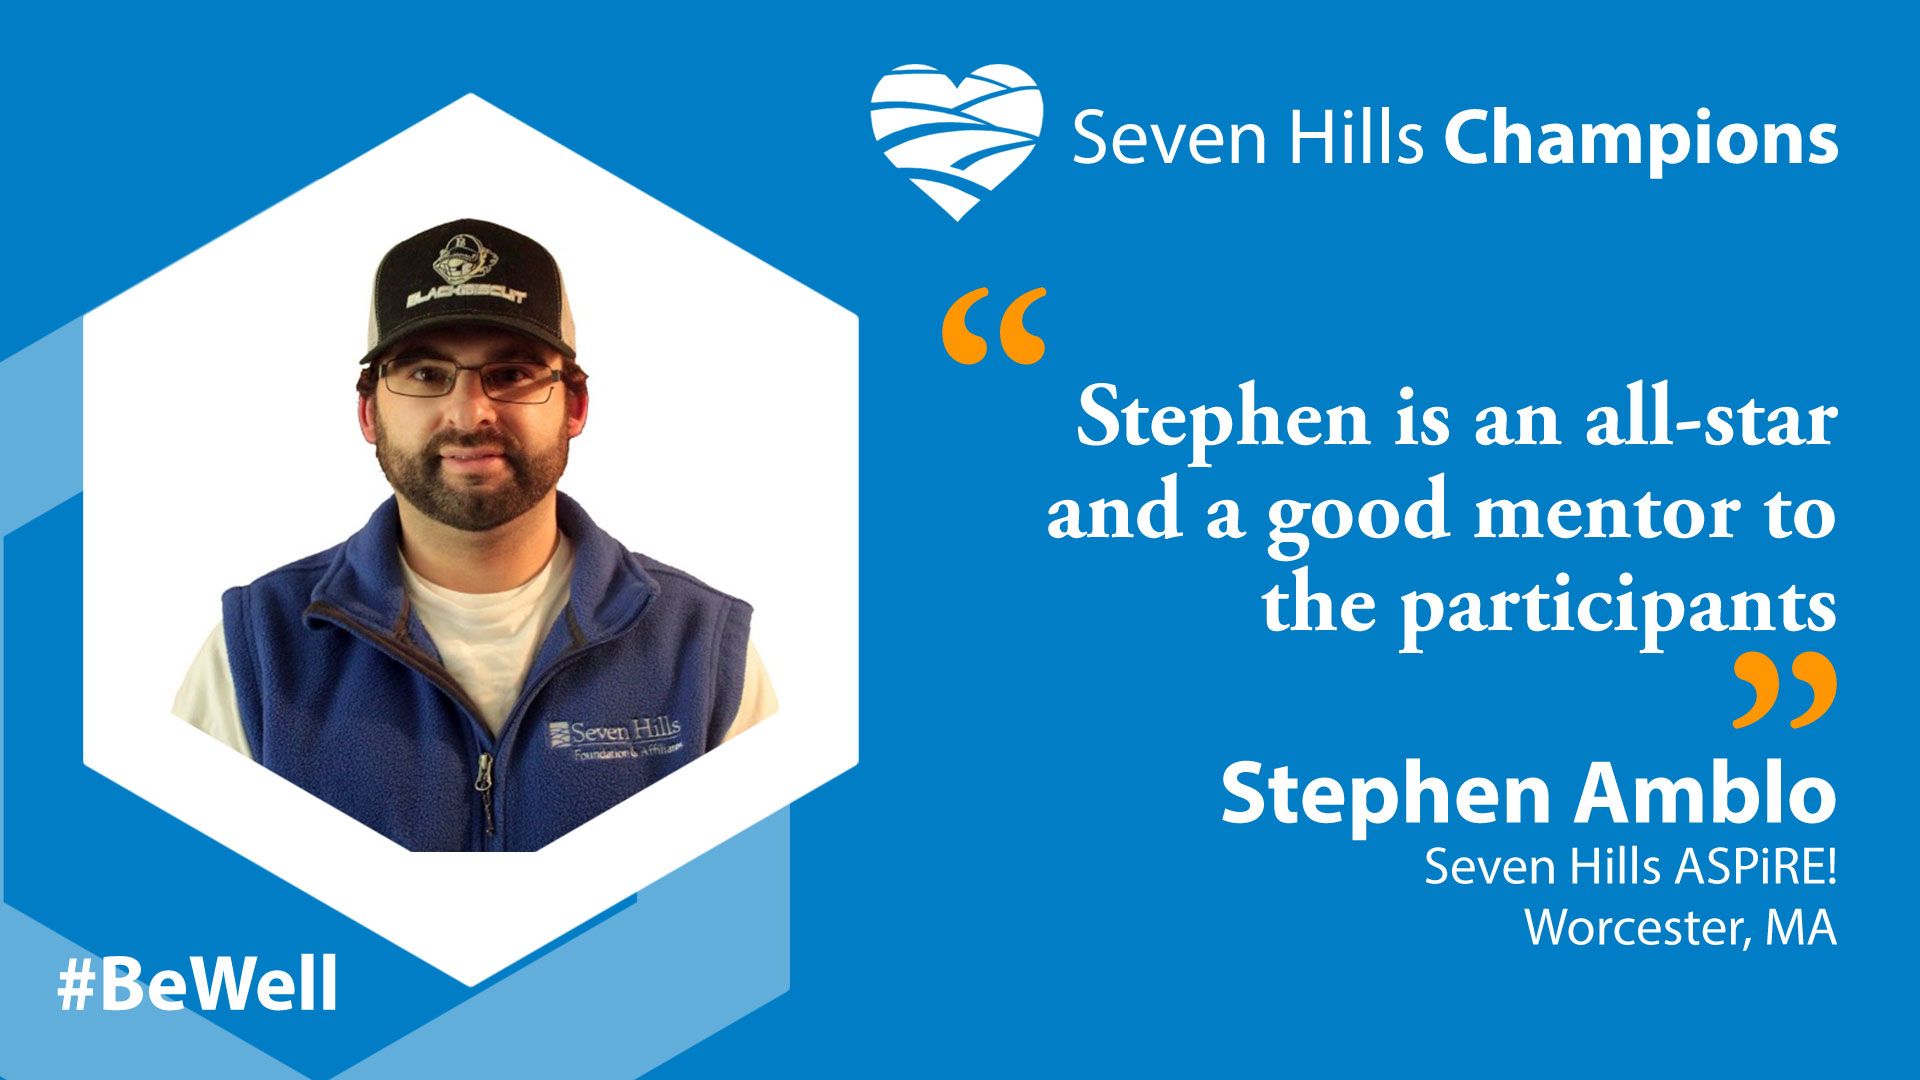 Introducing This Week's Seven Hills Champion, Stephen Amblo